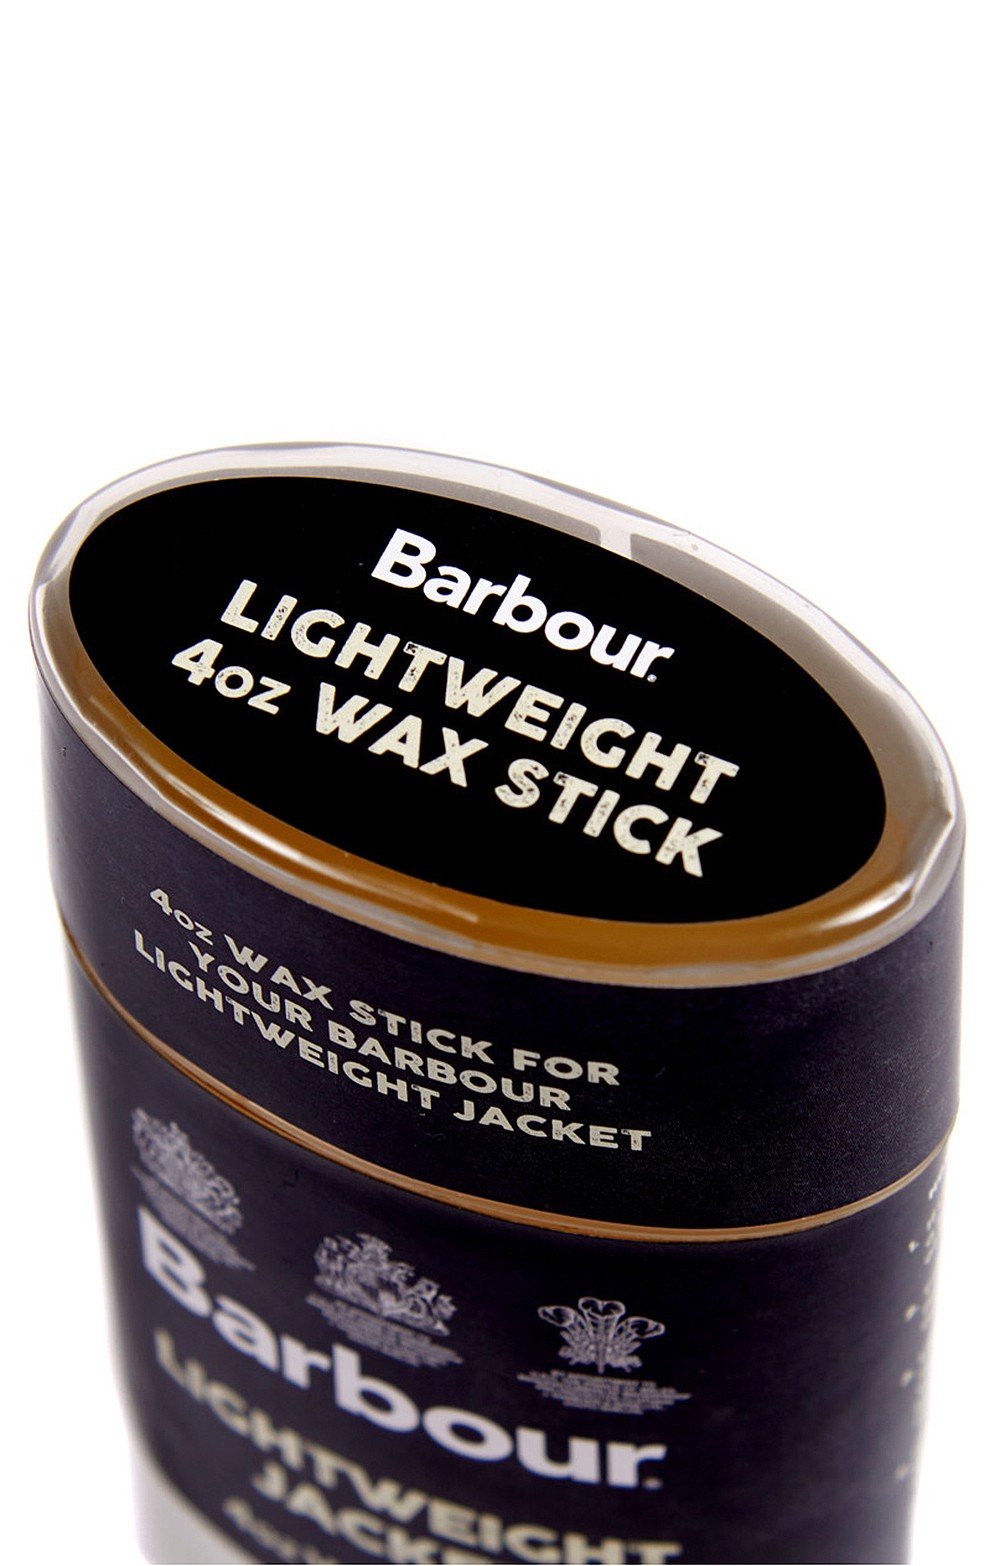 barbour wax dressing tin